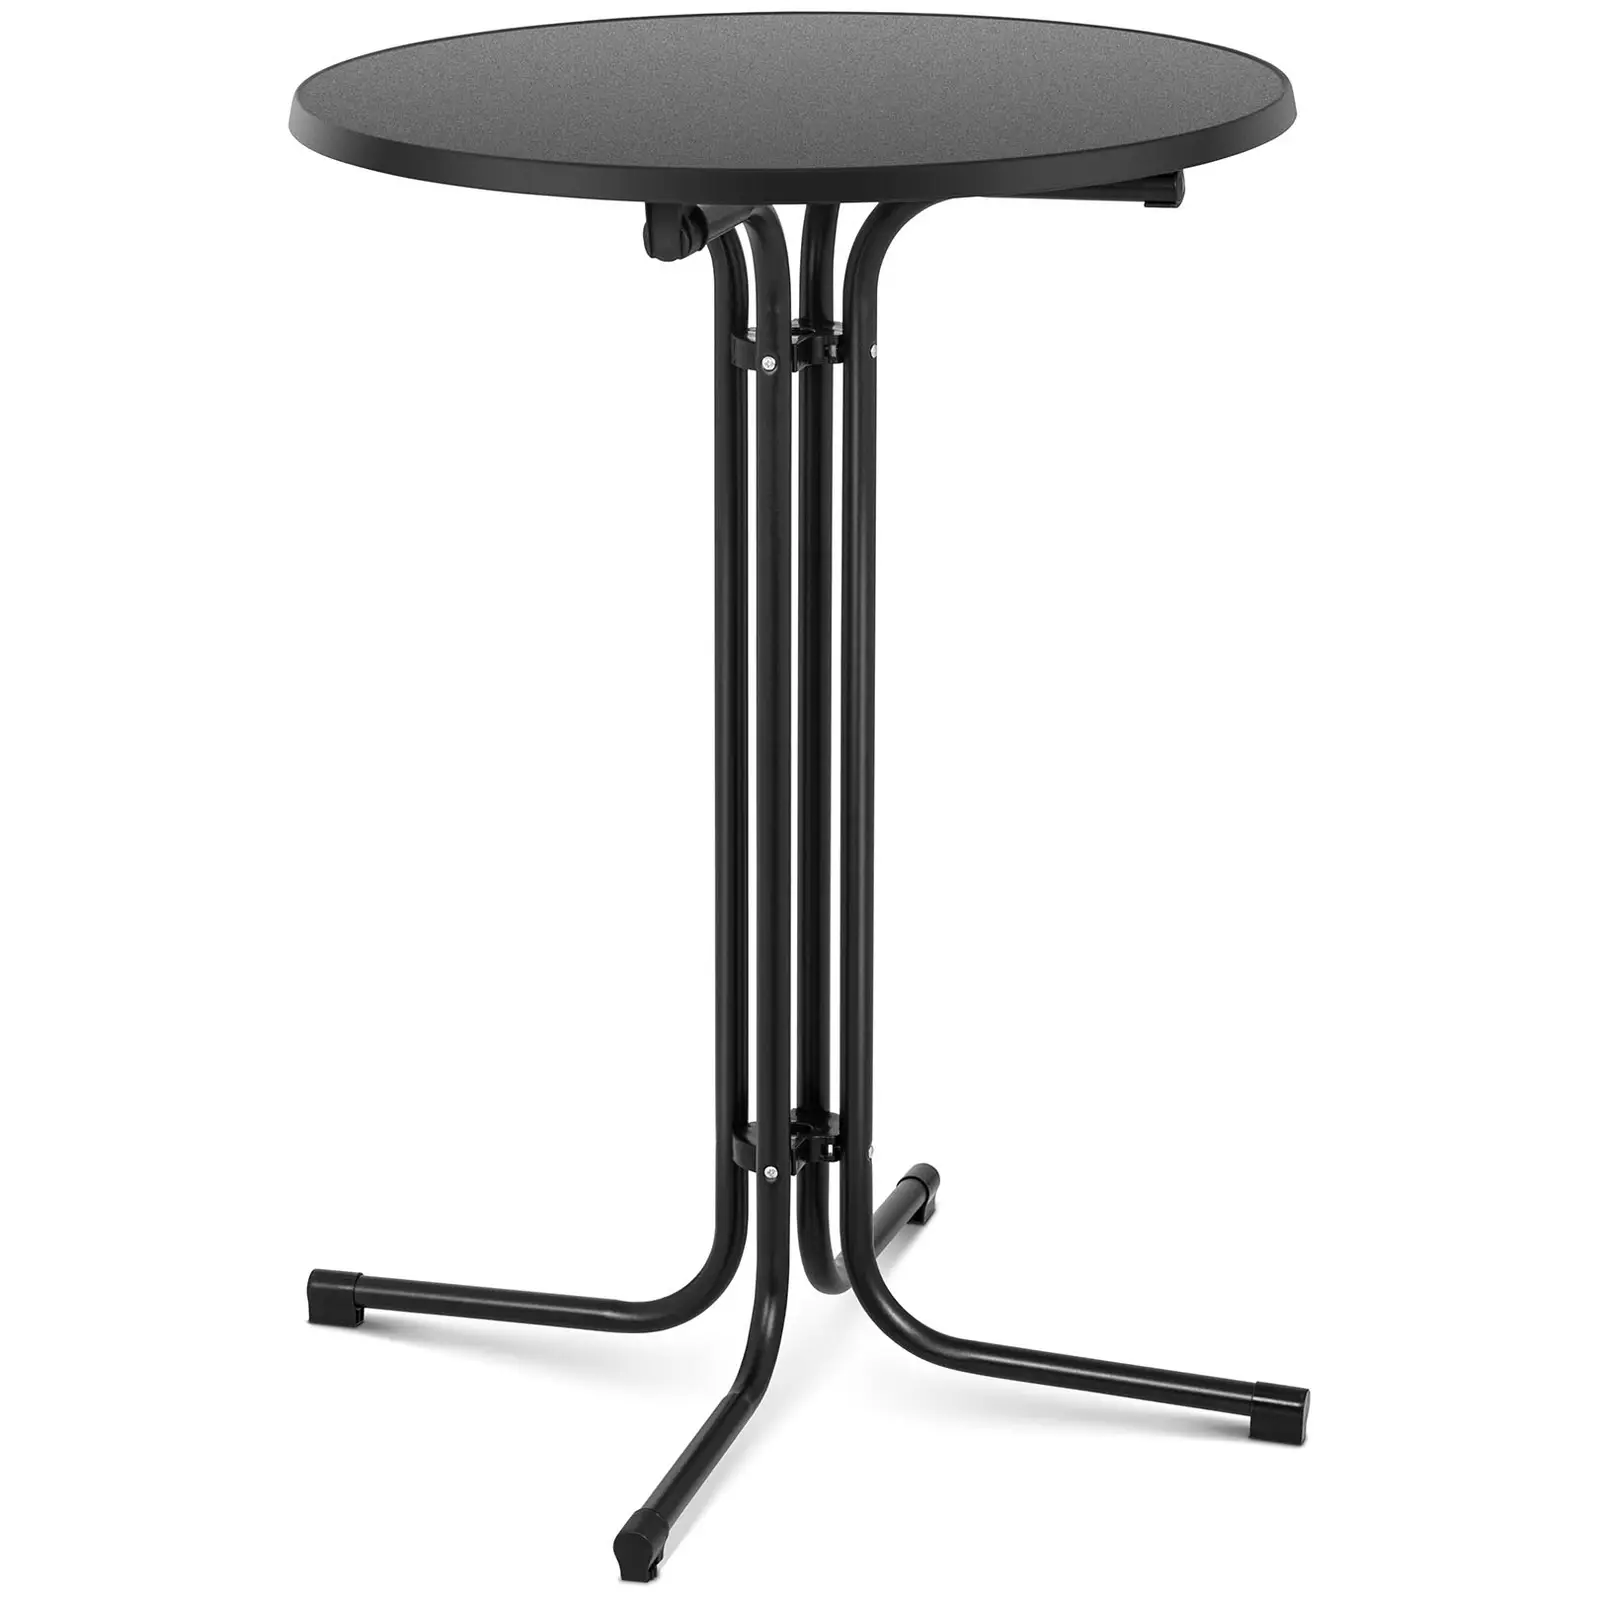 Koktejlový stůl - Ø 80 cm - skládací - černý